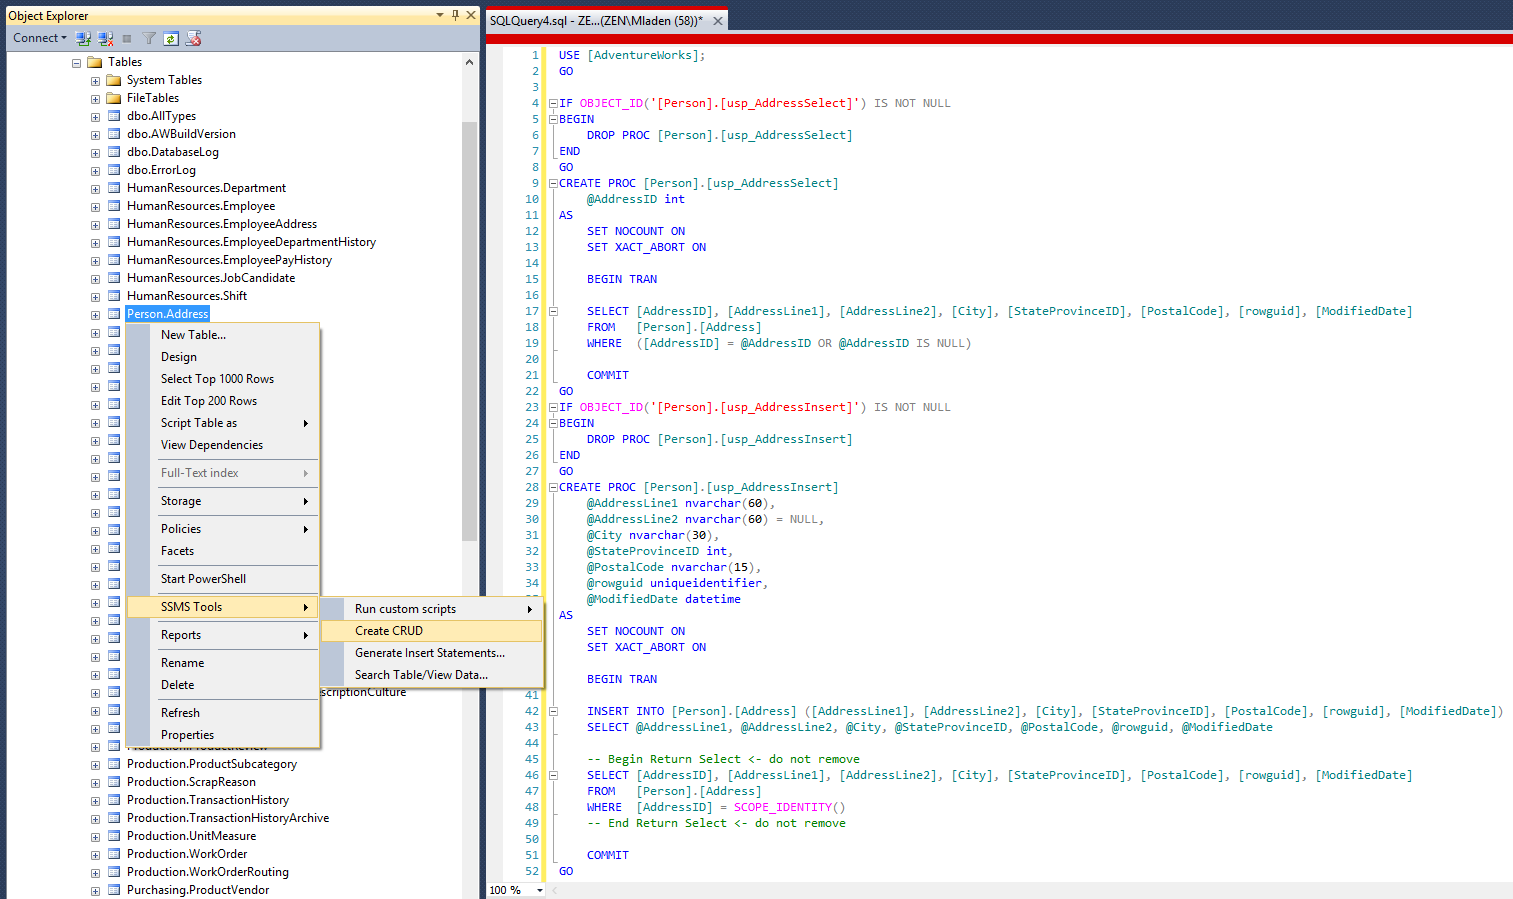 Screenshot of CRUD generation in SSMS Tools